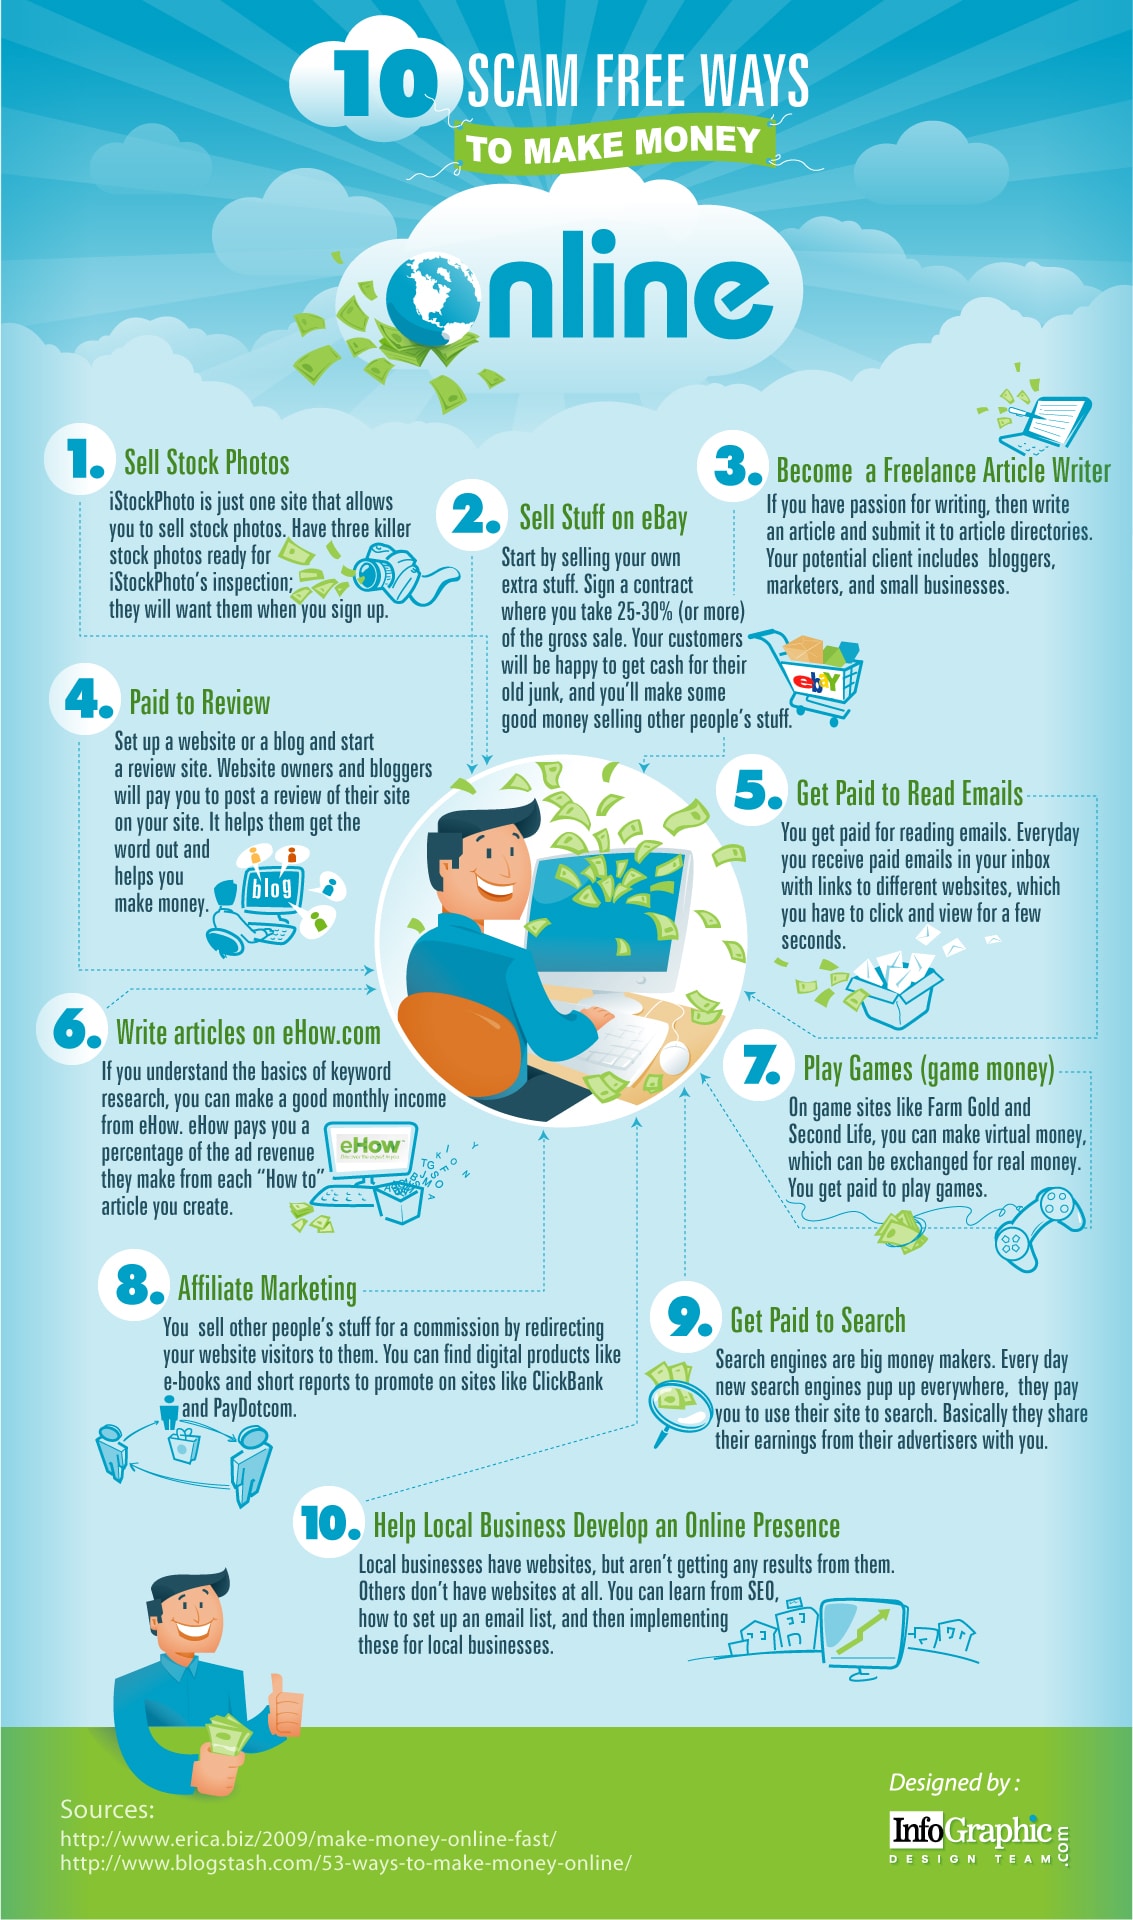 10 Scam Free Ways To Make Money Online [Infographic]